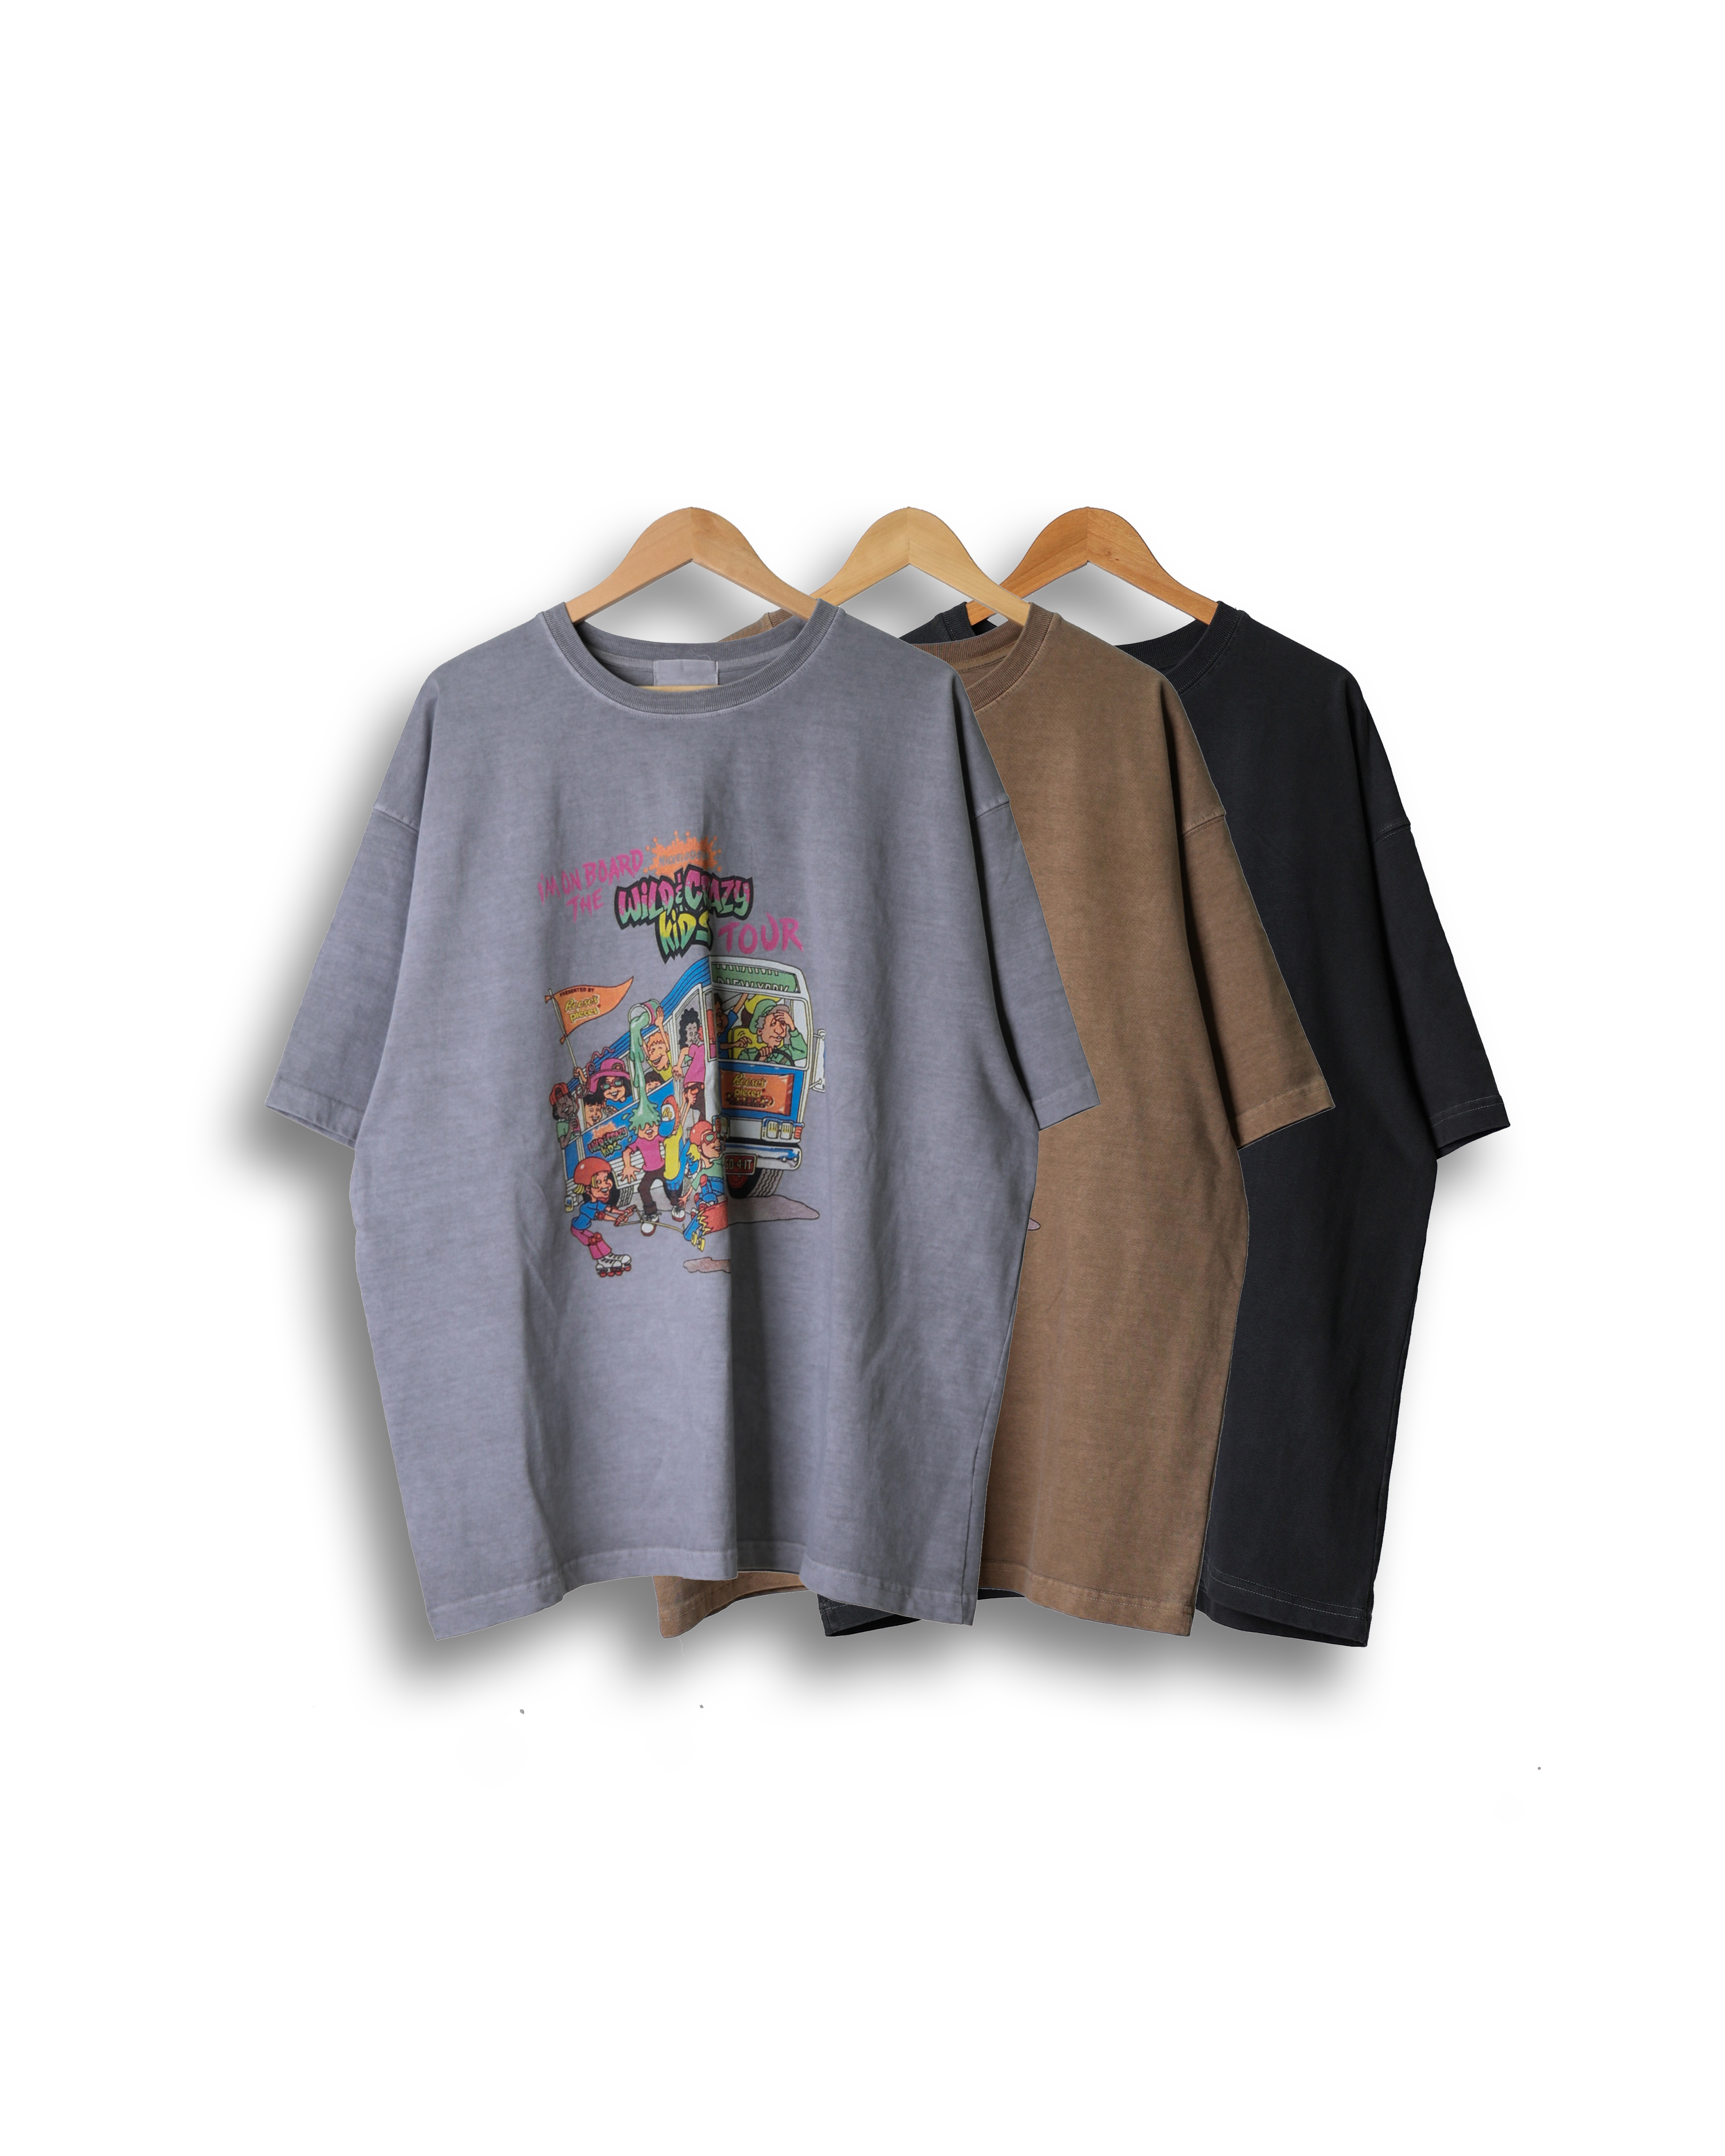 NOOR WILD KIDS Pigments Over T Shirts (Black Charcoal/Light Gray/Camel Brown)